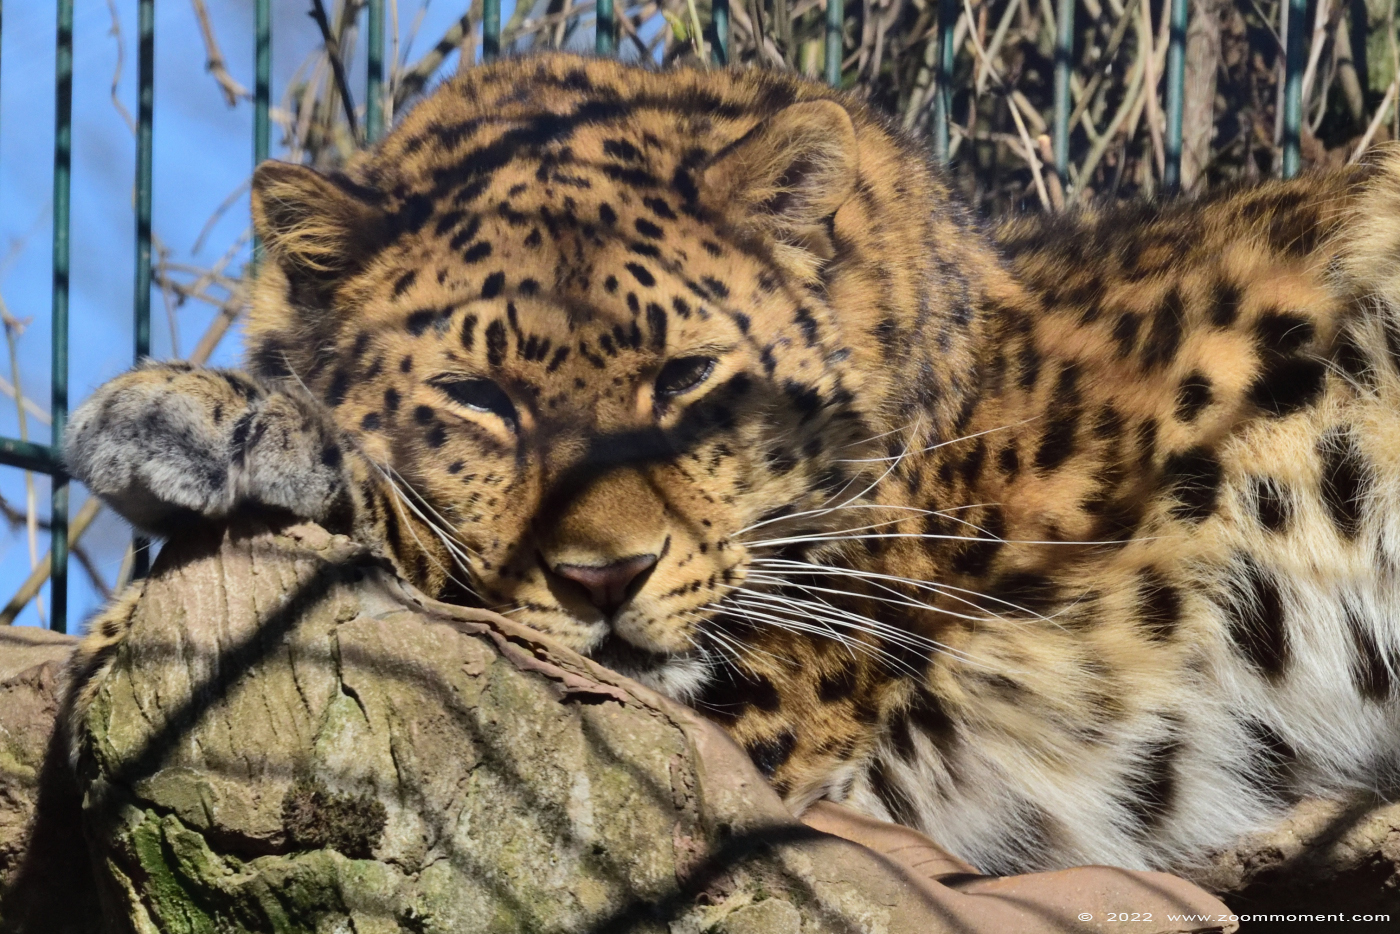 amoerpanter ( Panthera pardus orientalis ) amur leopard
Trefwoorden: Monde Sauvage Belgium amoerpanter Panthera pardus orientalis amur leopard